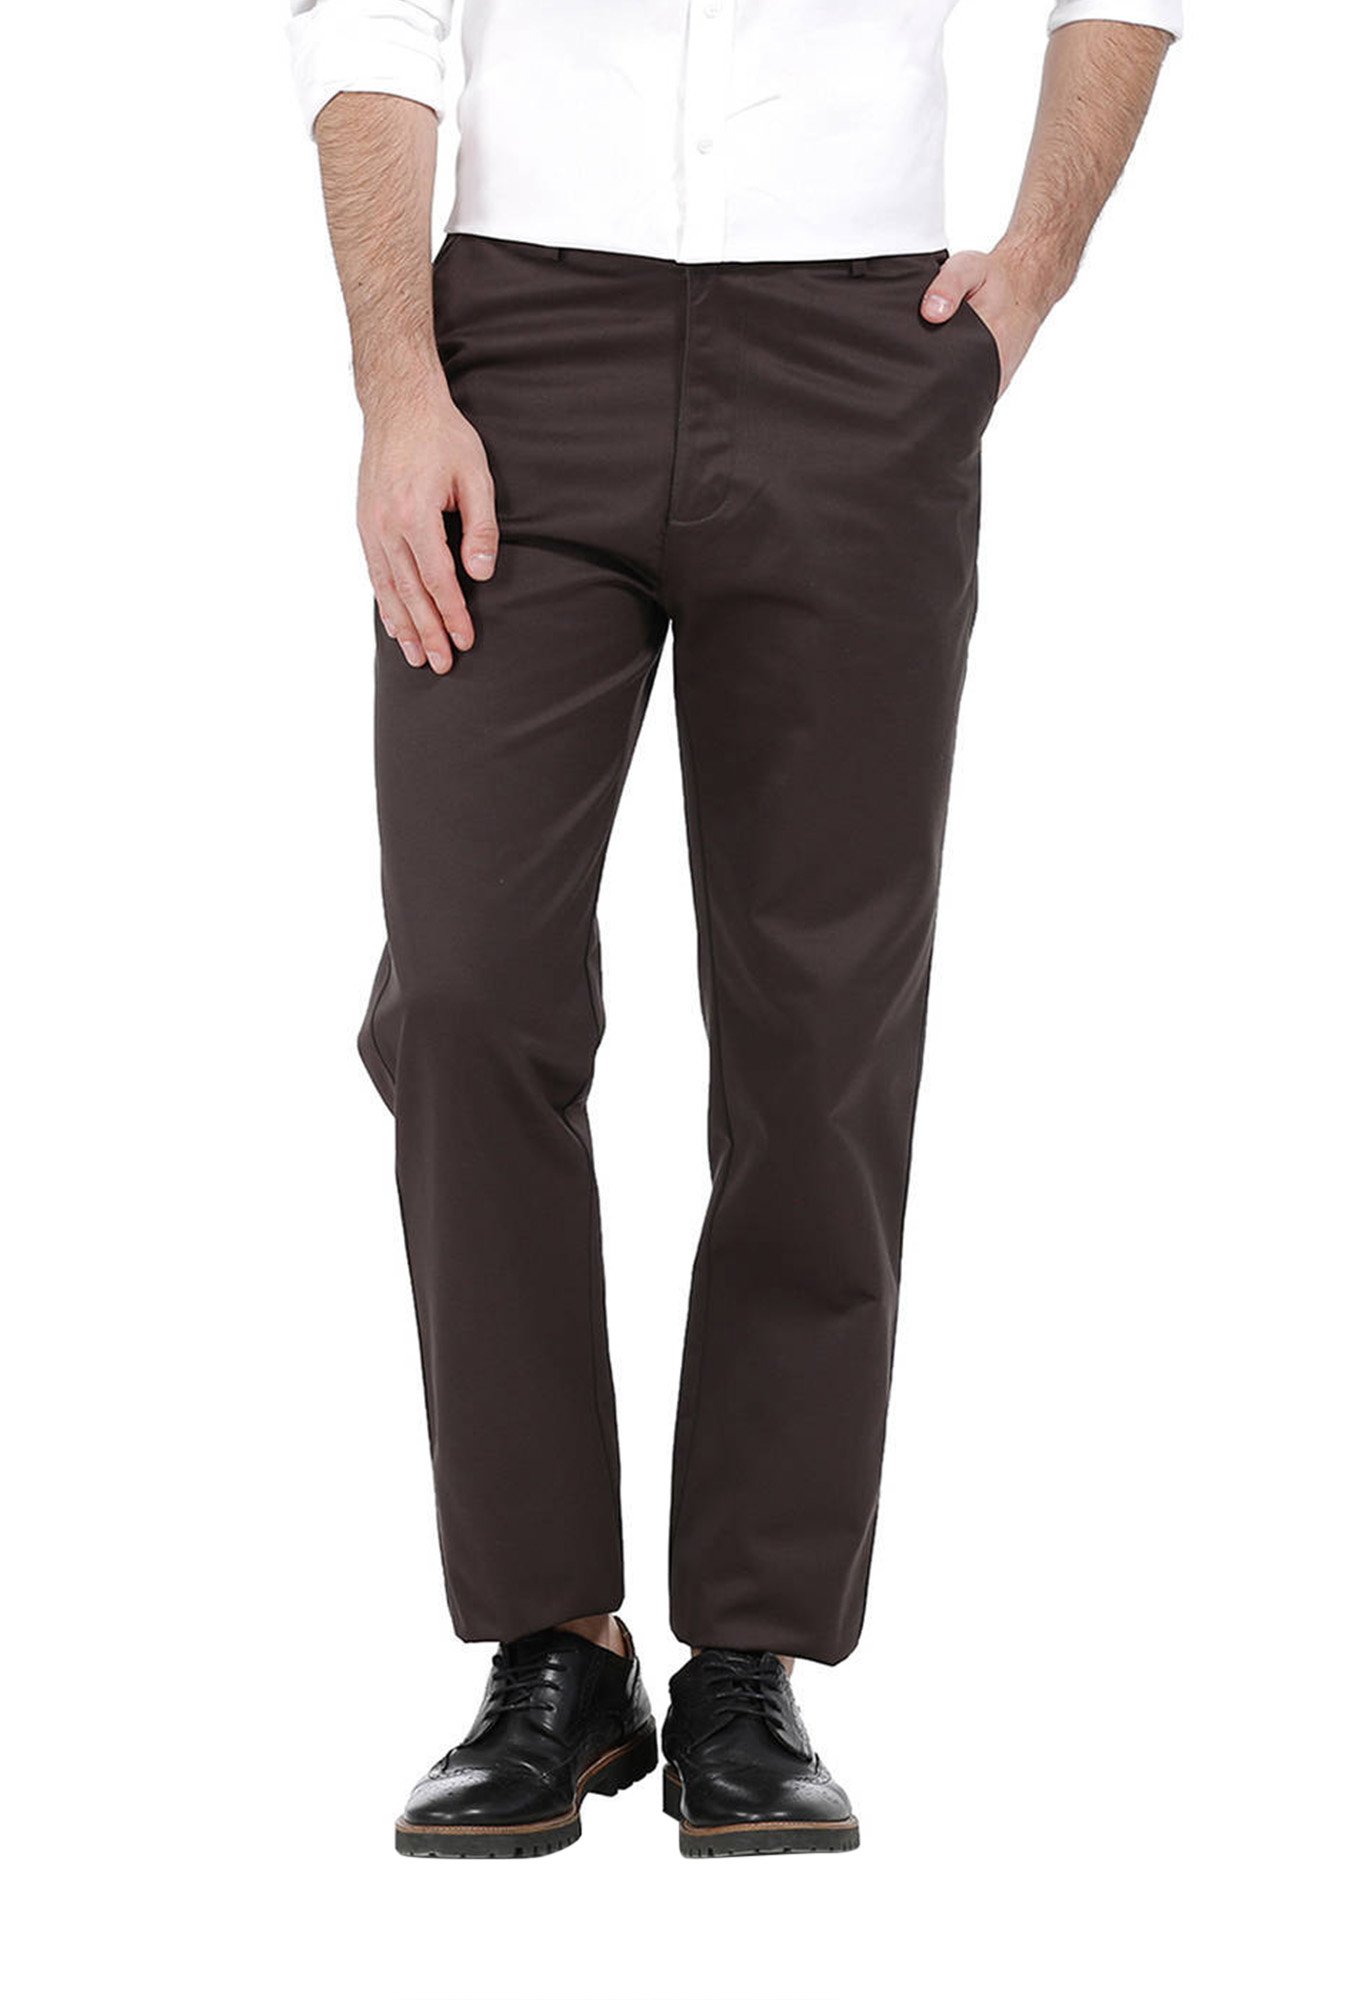 Buy Basics Beige Comfort Fit Trousers for Mens Online  Tata CLiQ